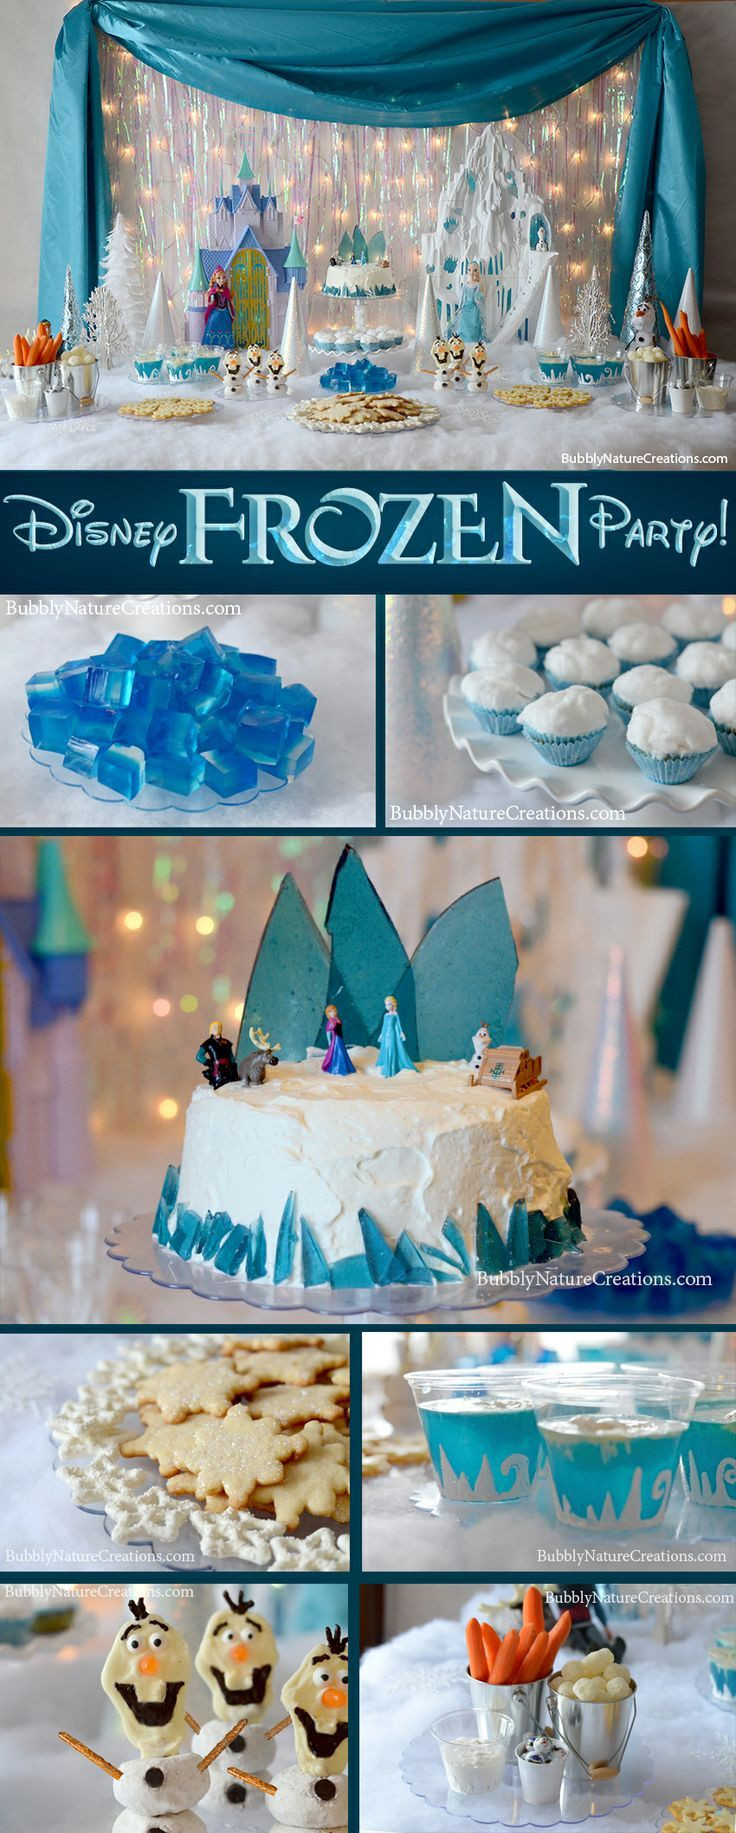 Best ideas about Frozen Birthday Ideas
. Save or Pin Disney Frozen Birthday Party Theme Now.